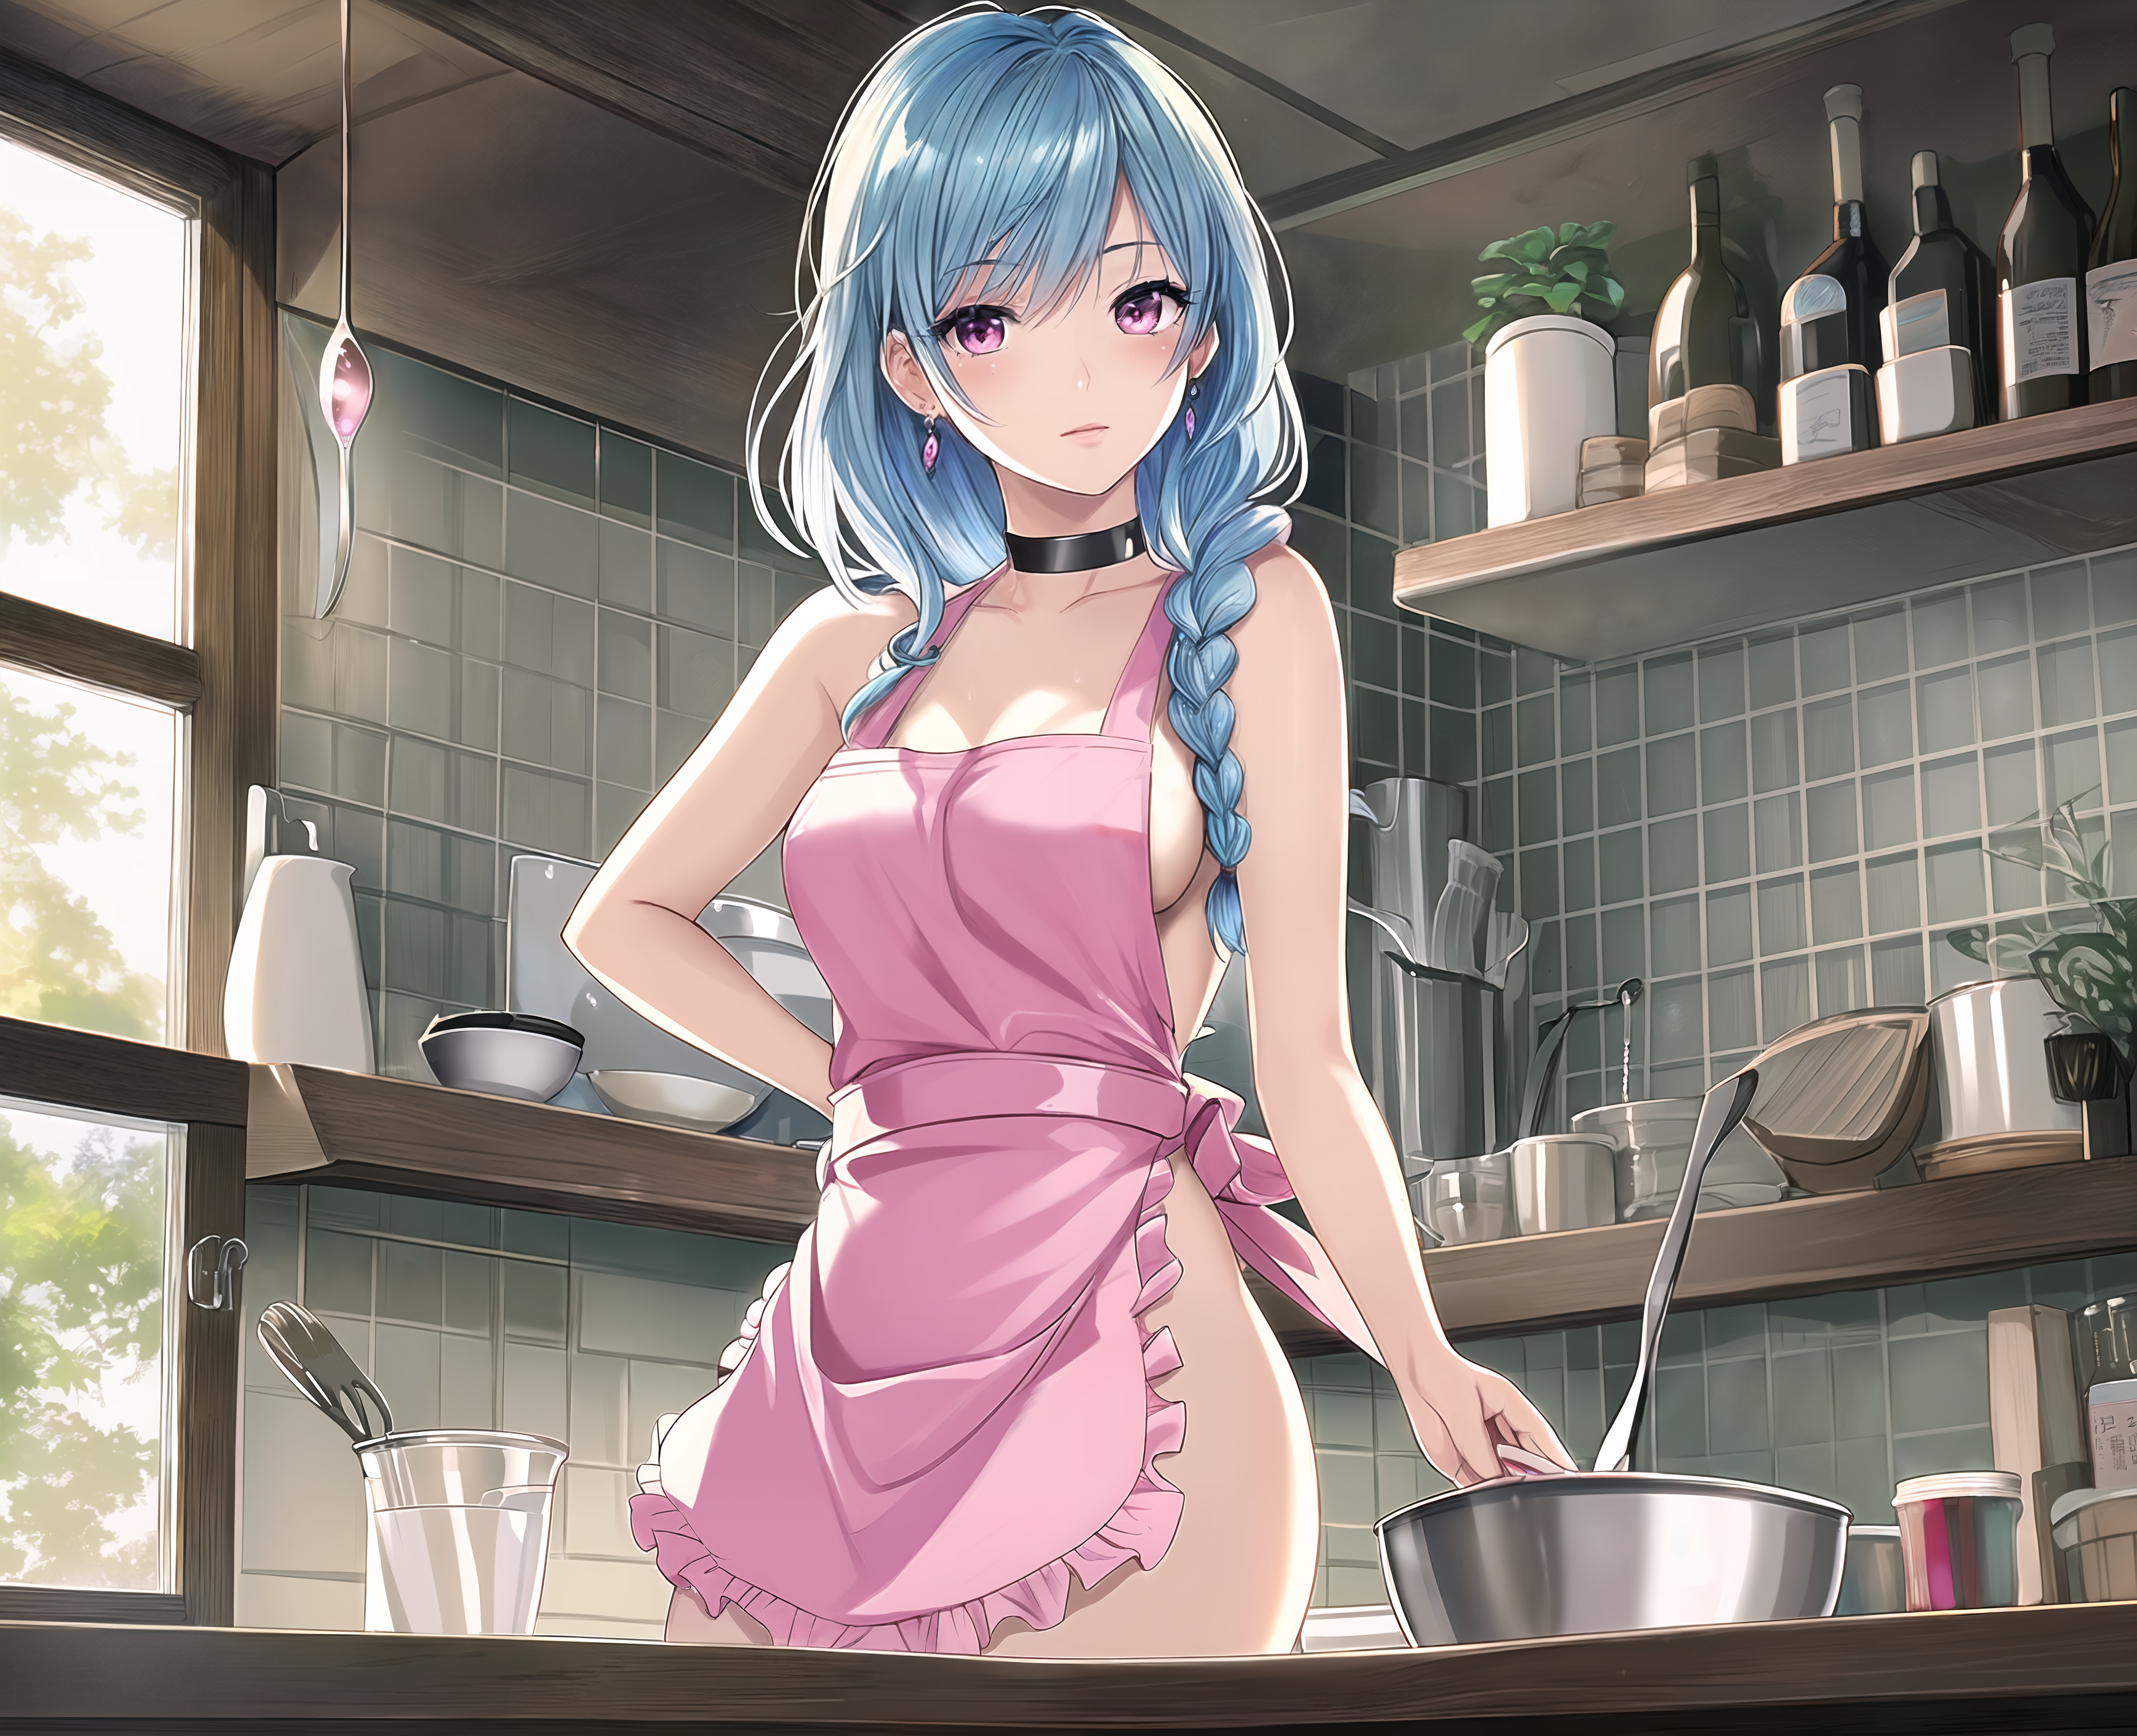 Anime 4096x3328 anime anime girls artwork AI art digital art Mia27000 kitchen apron naked apron blue hair purple eyes braids sideboob choker cooking